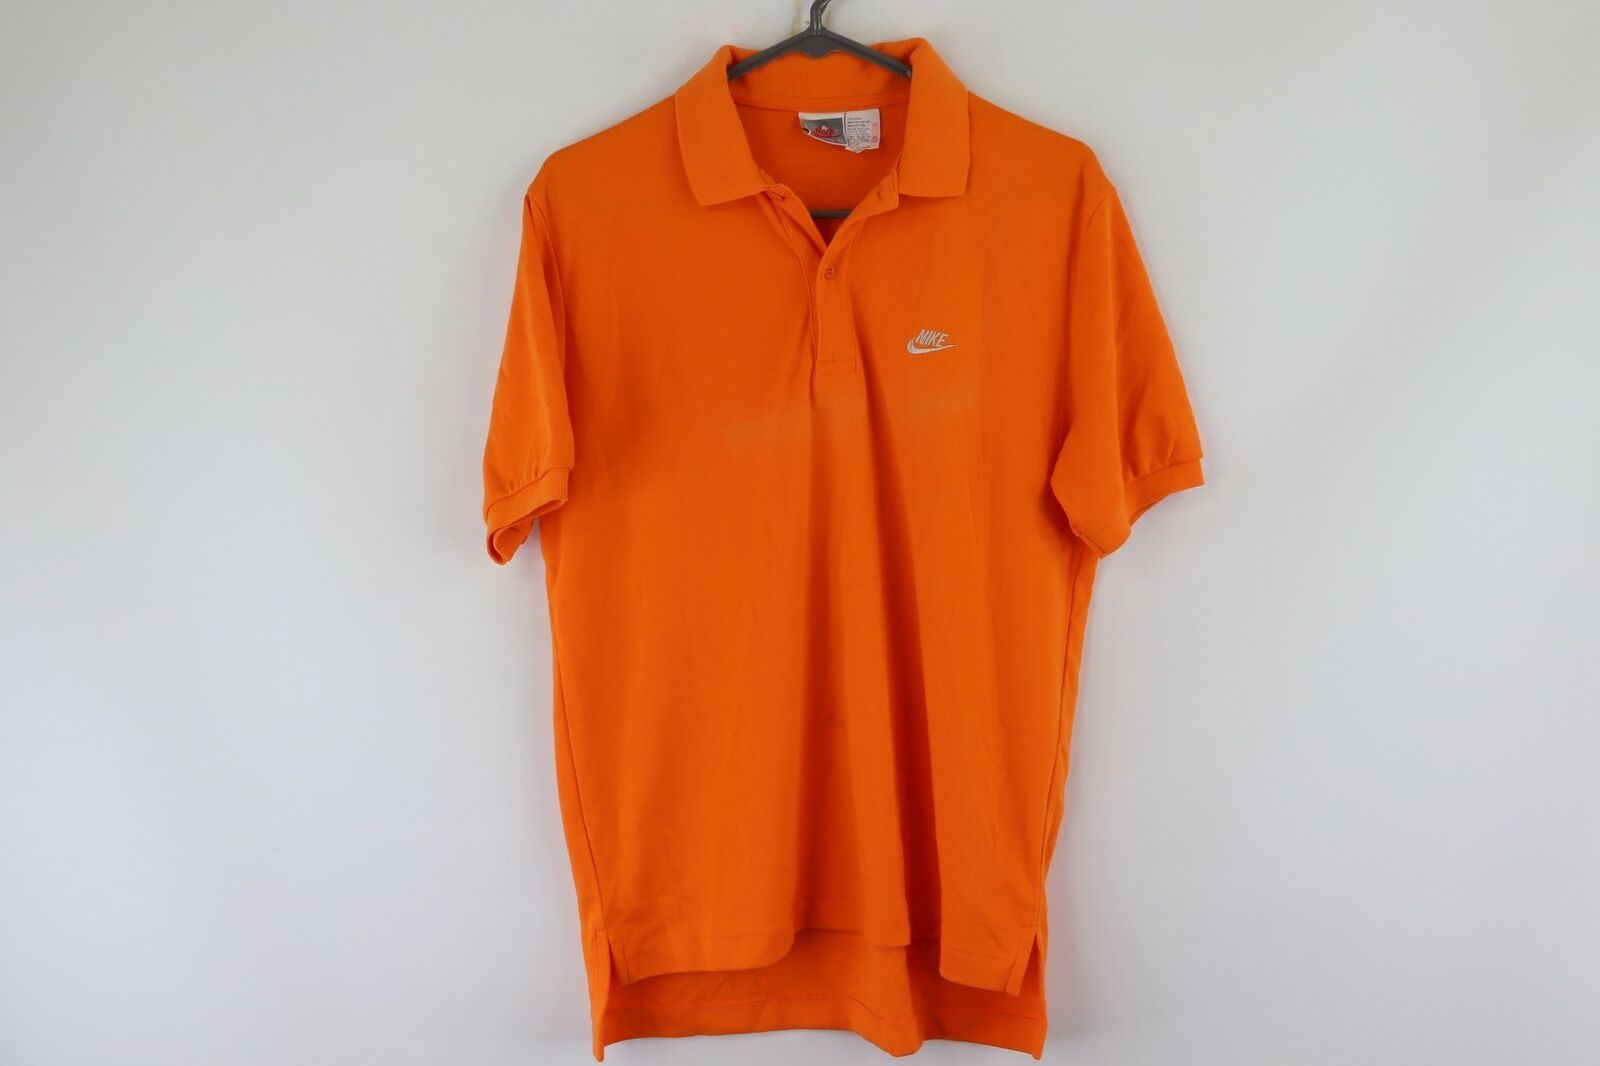 Nike Vintage 90s Nike Travis Scott Mini Swoosh Polo Shirt Orange Size US M / EU 48-50 / 2 - 1 Preview